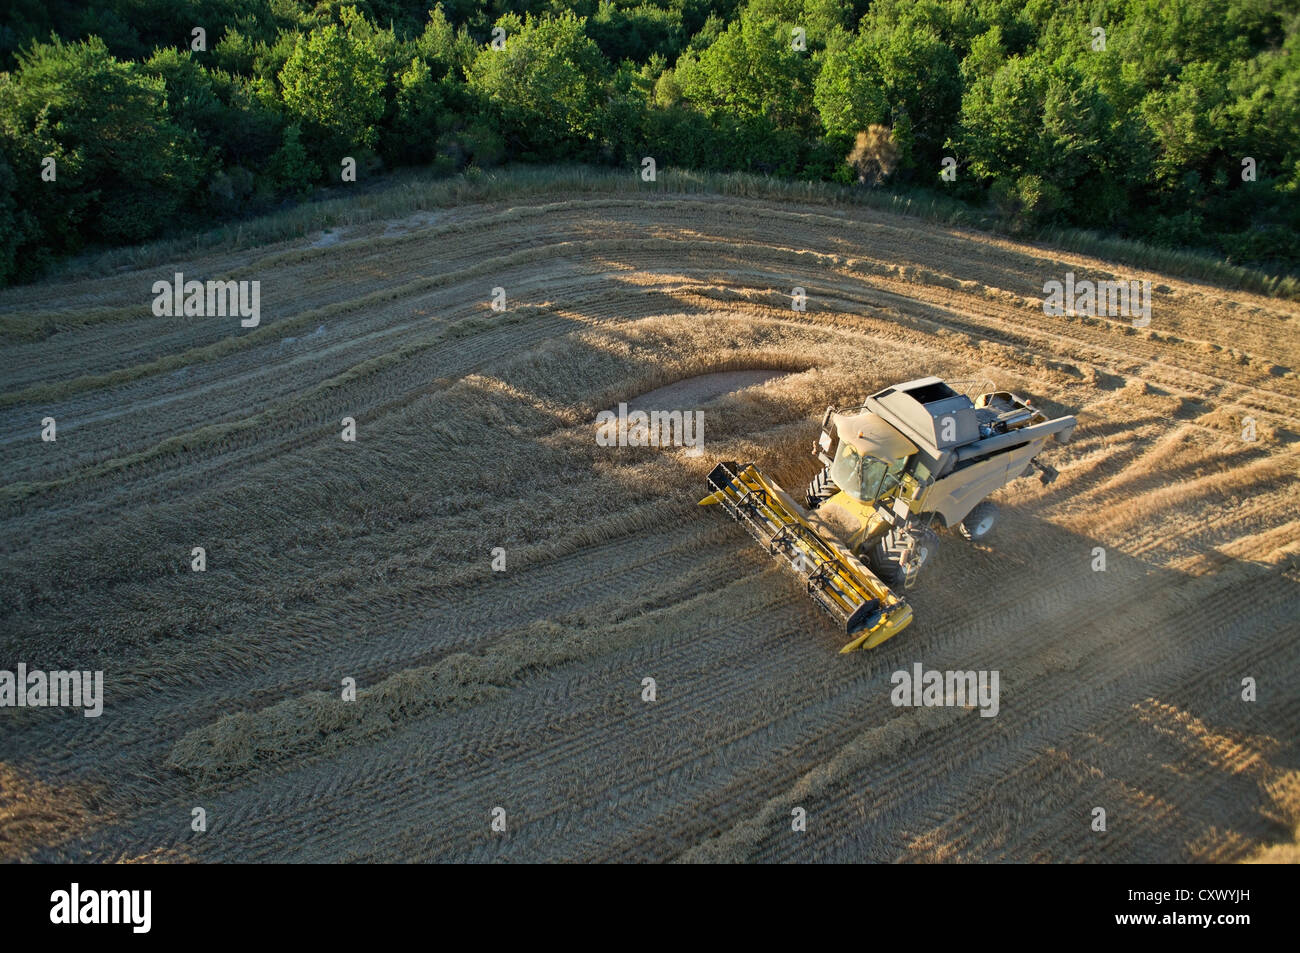 Farmer harvesting wheat using combine harvester - aerial view Stock Photo